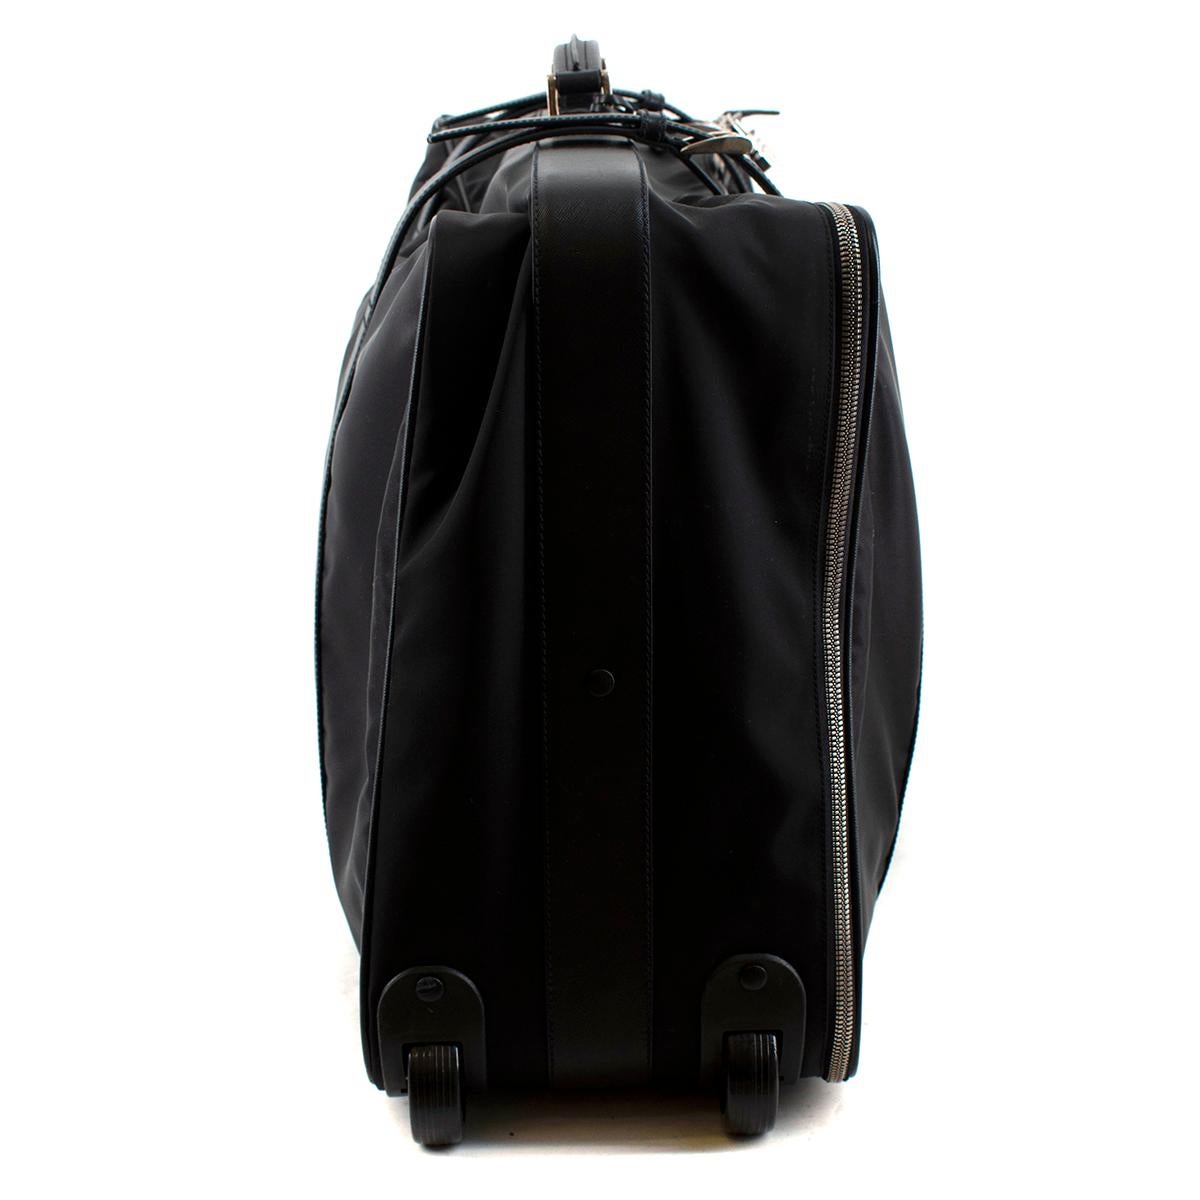 Prada Black Nylon & Saffiano Leather Semi-Rigid Suitcase

- Nylon with Saffiano leather handle and trim
- Polished steel hardware and dark metal zipper
- Logo lining
- Tag logo inside, triangle enameled logo outside on the front
- One compartment